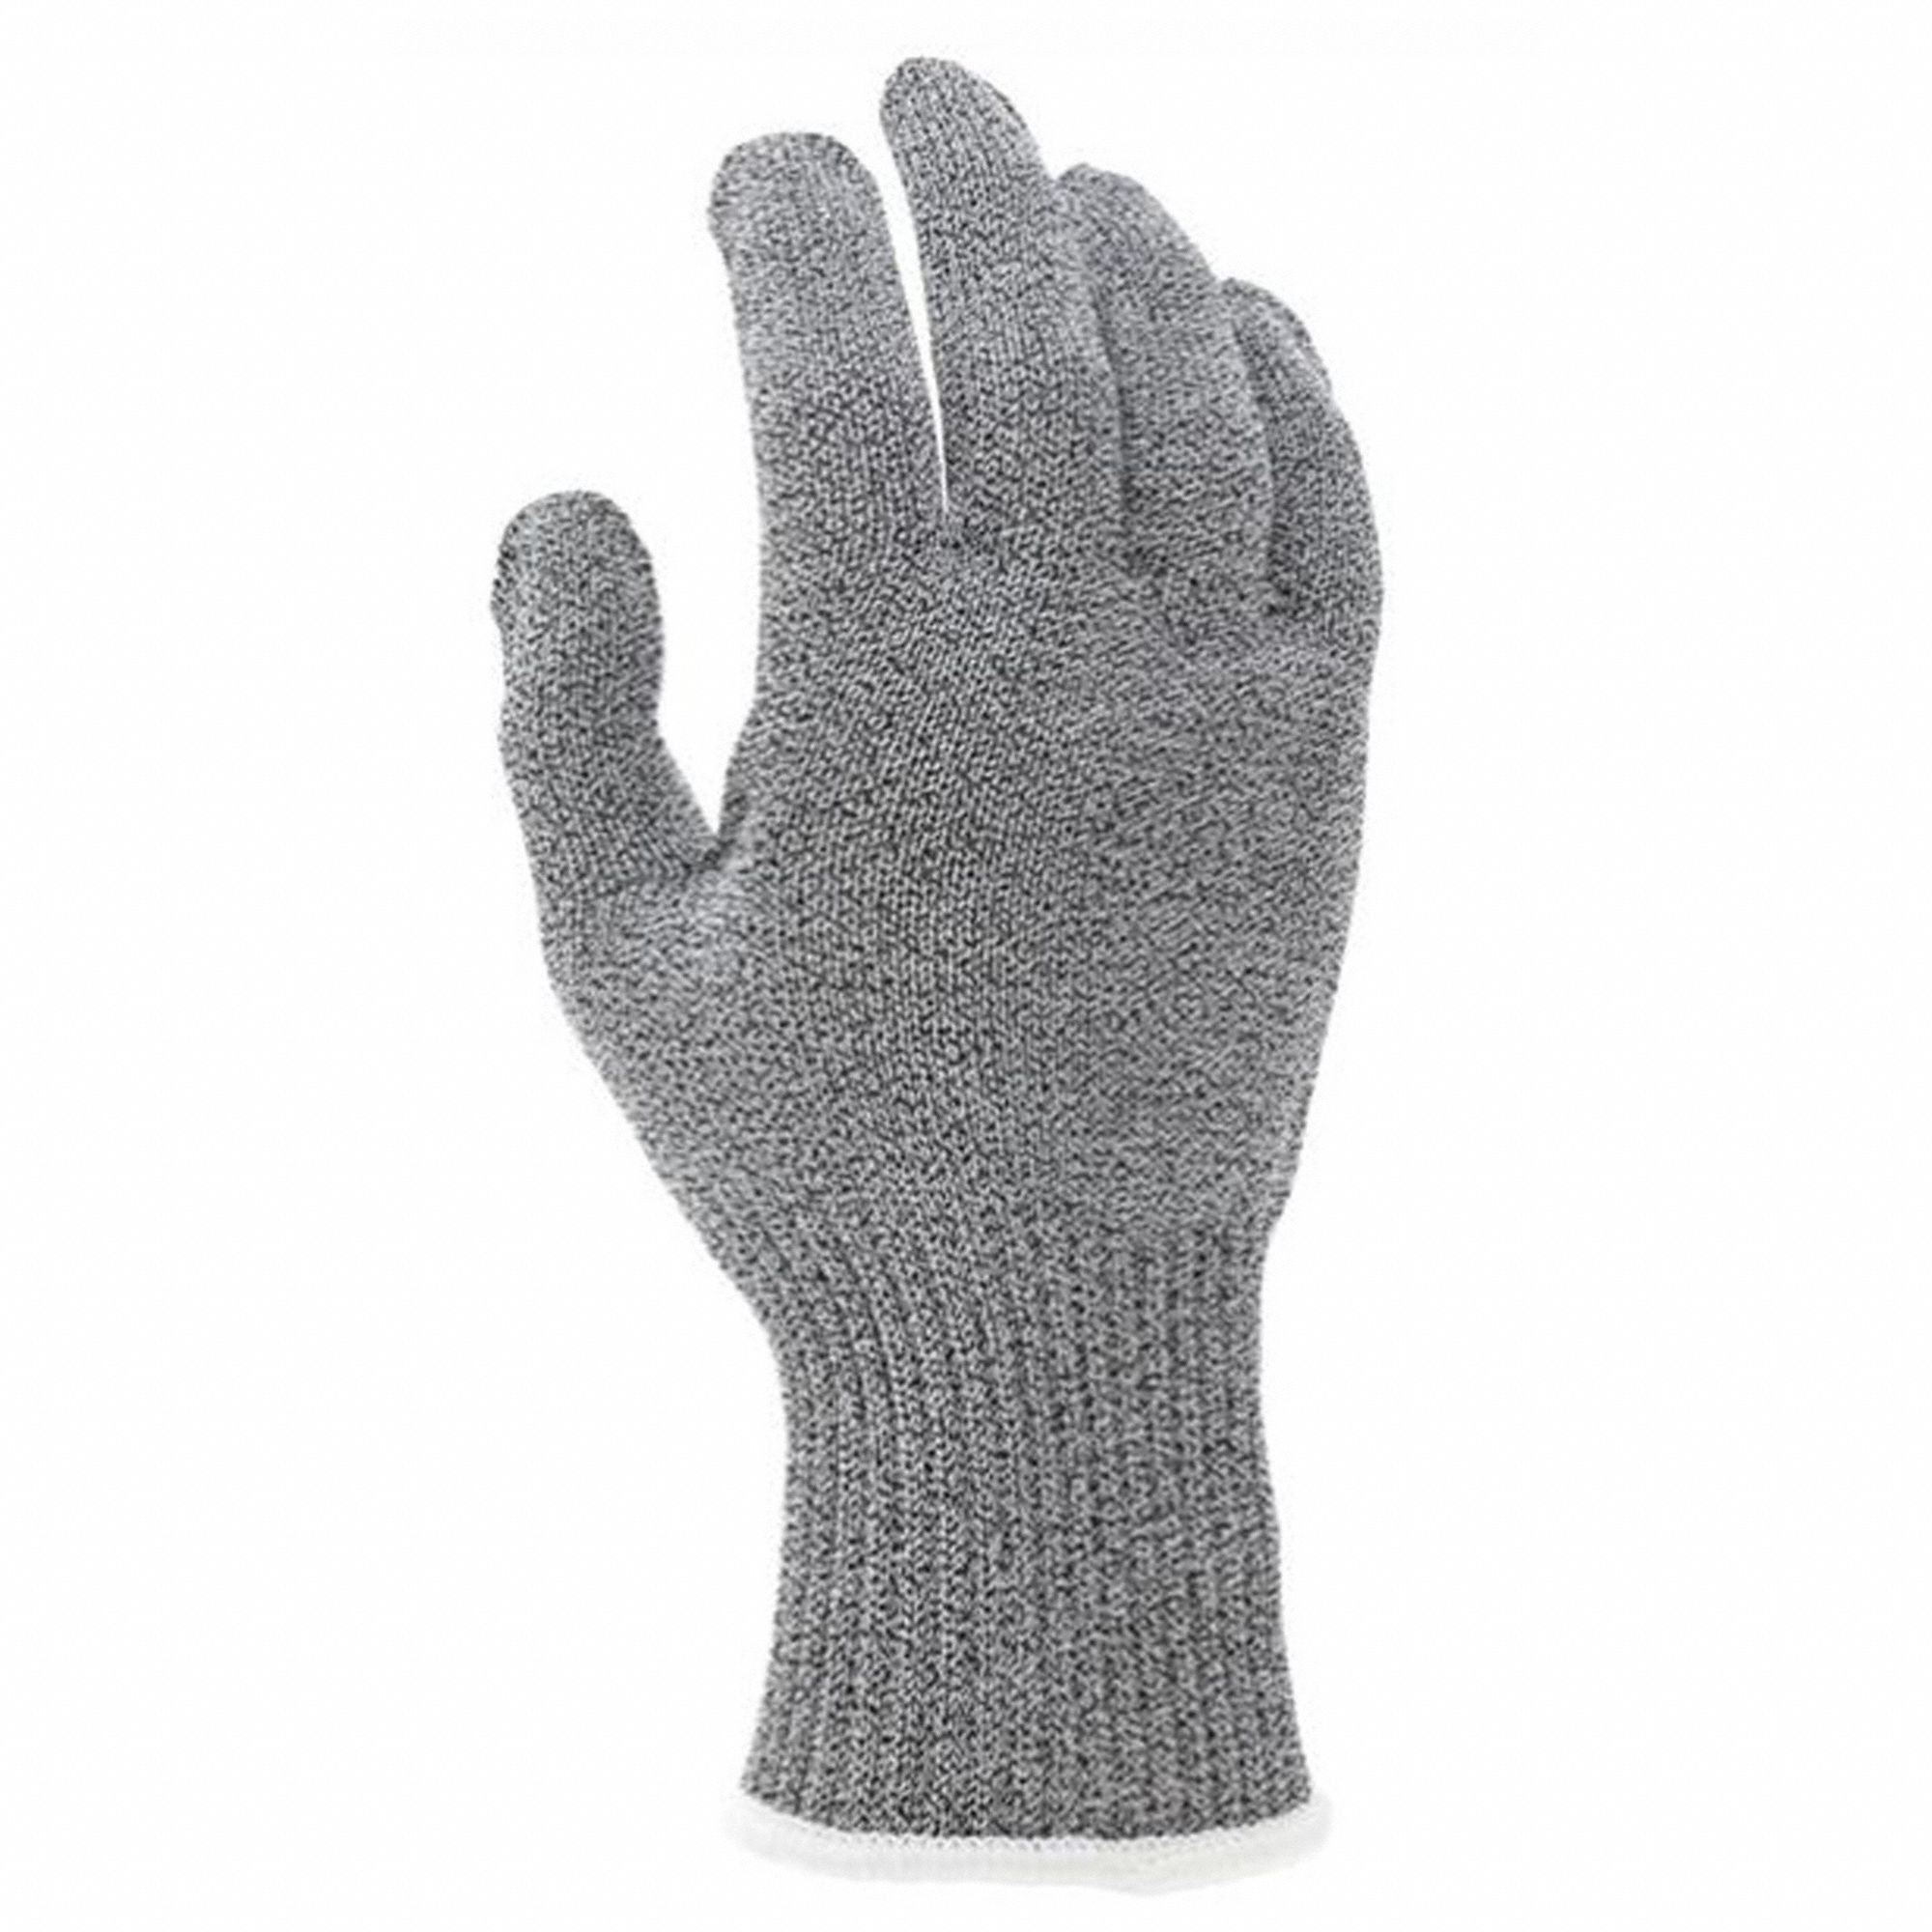 Cut Resistant Gloves ANSI Level A4 | Safety Work Gloves Men Heavy Duty |  Cut Proof Mens Work Gloves with Grip (XL)